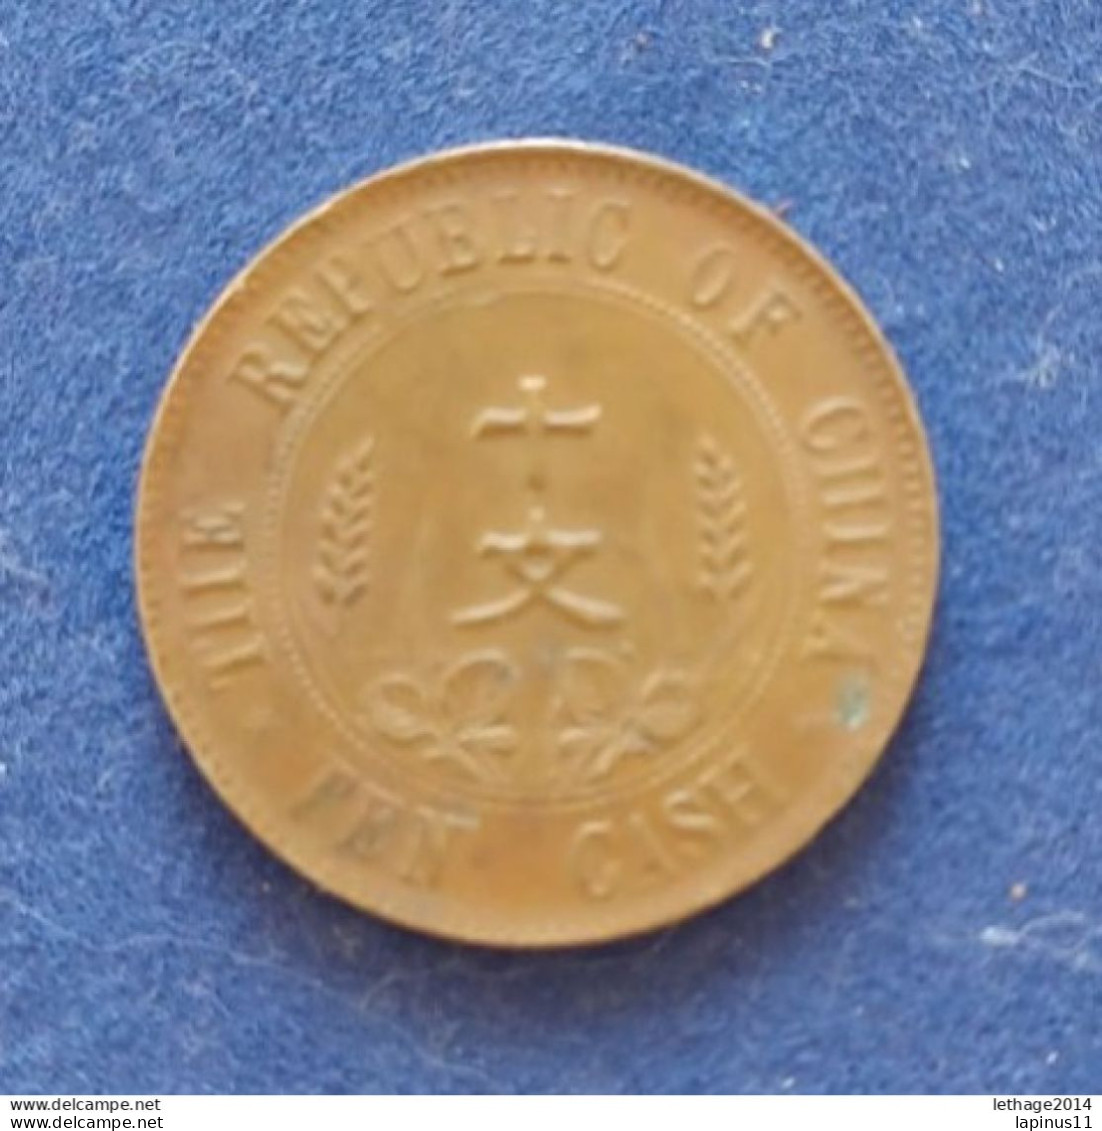 COIN 10 CASH CINA REPUBLIC OF CHINA 912 1948 - Chine